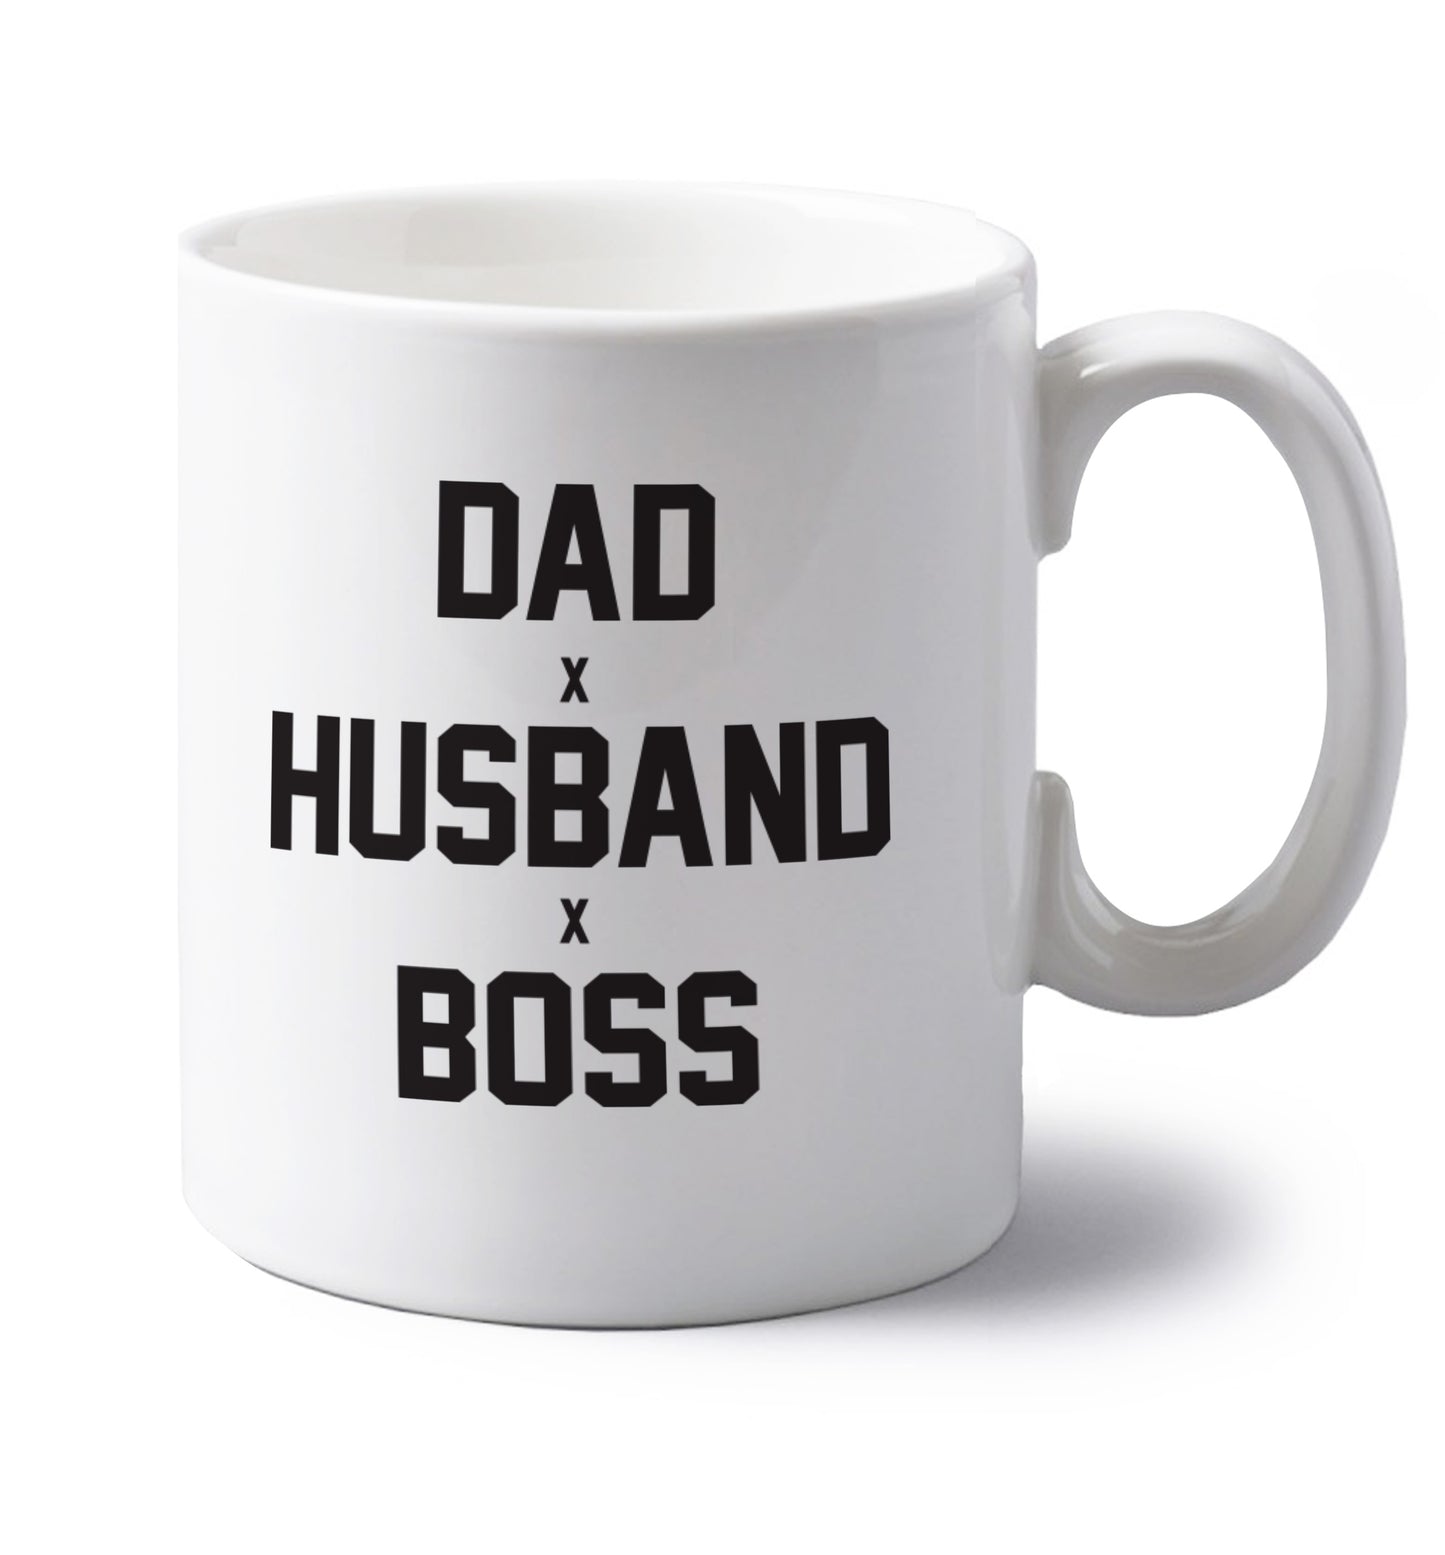 Dad husband boss left handed white ceramic mug 